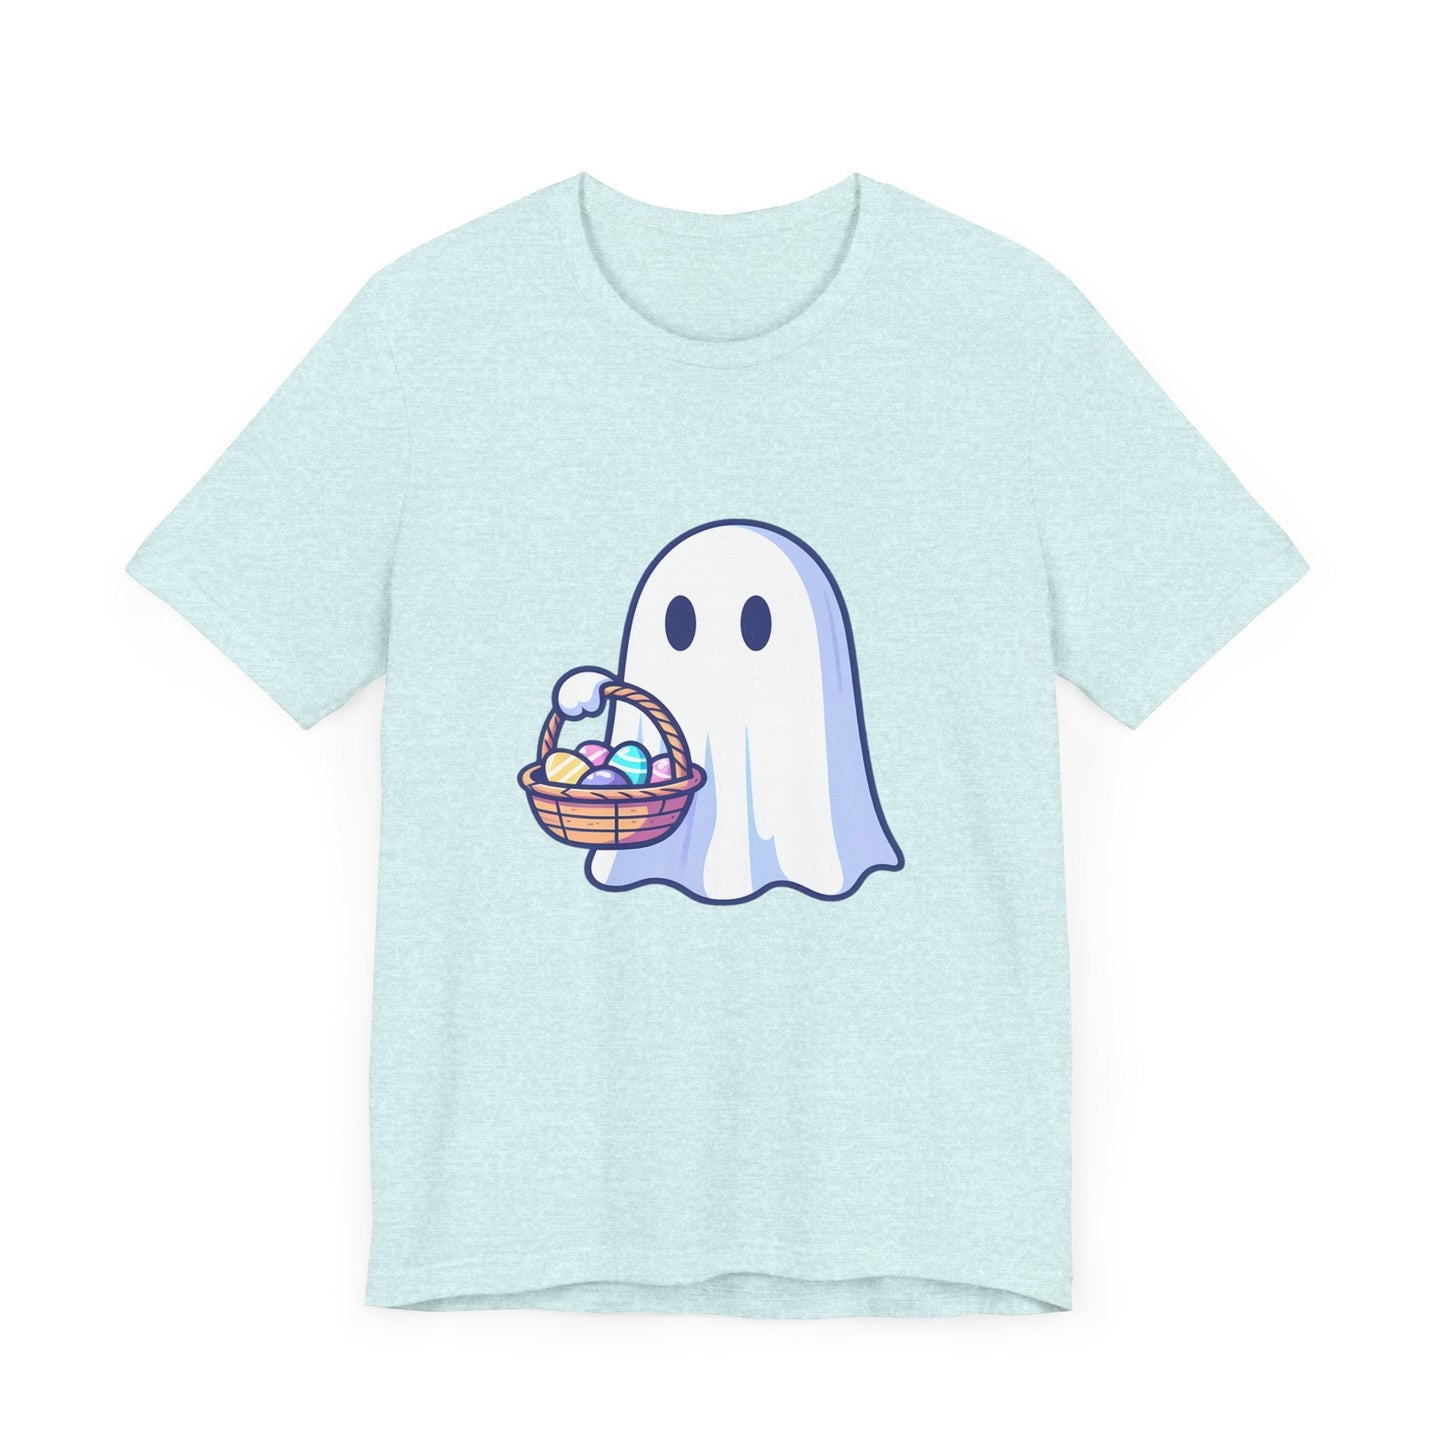 Ghost With Easter Basket Short Sleeve Tee ShirtT - ShirtVTZdesignsHeather Prism Ice BlueXSCottonCrew neckDTG